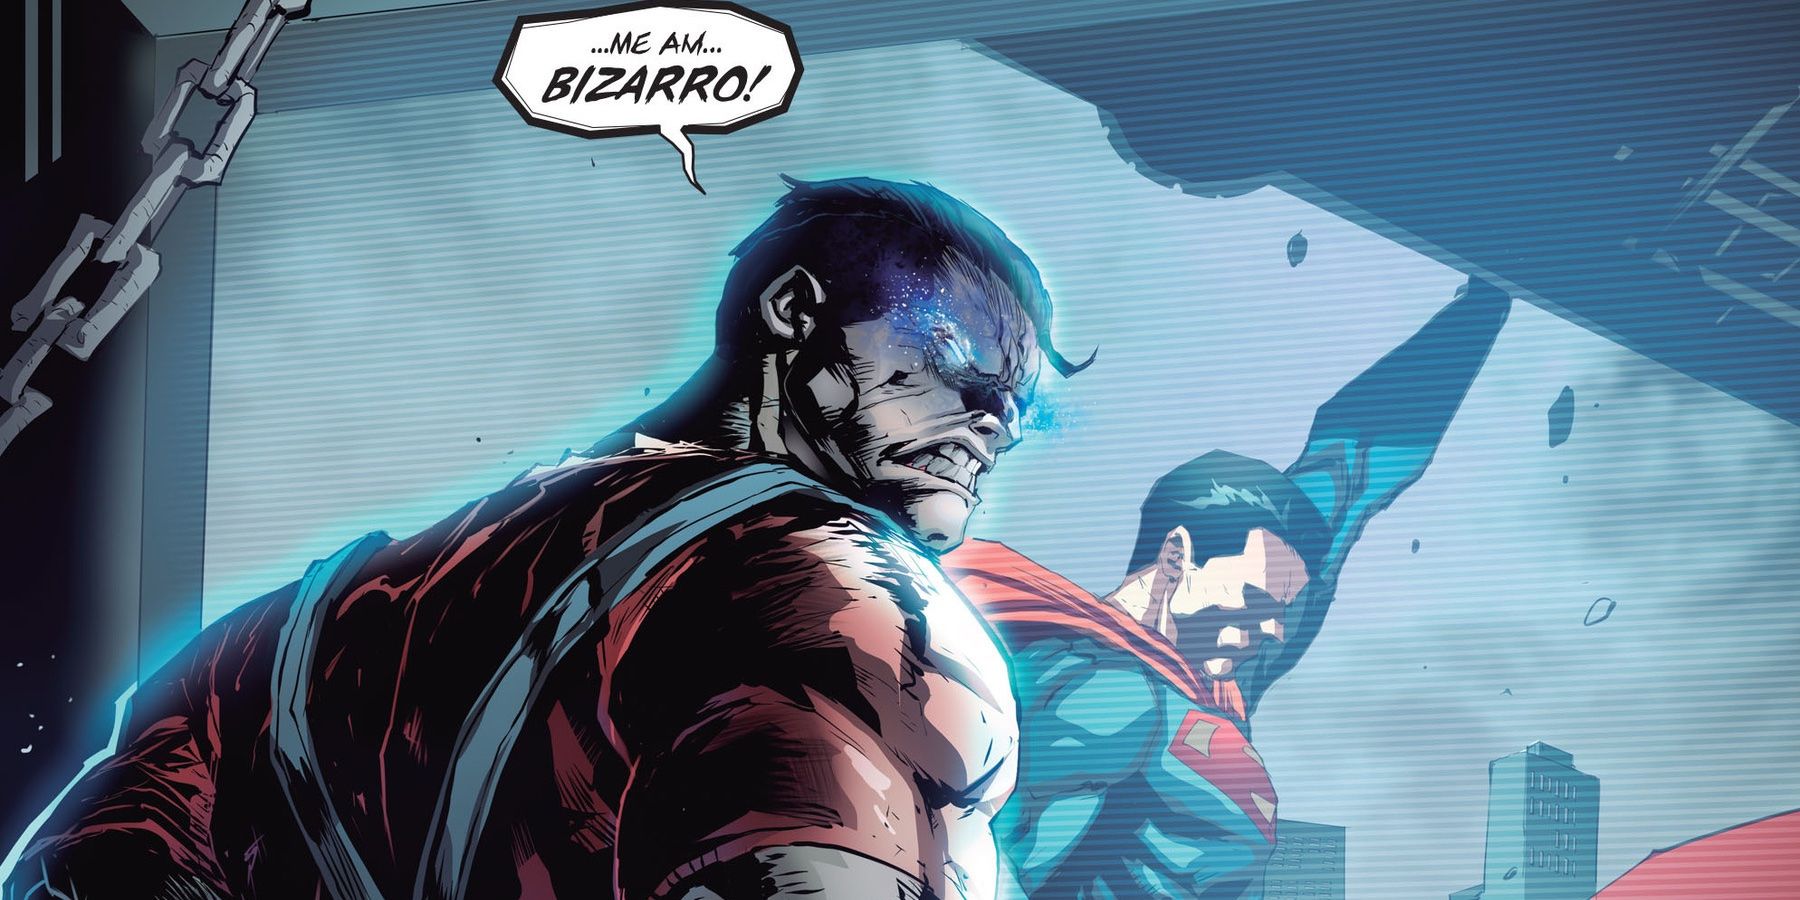 Bizarro learns how to speak English in Superman comics